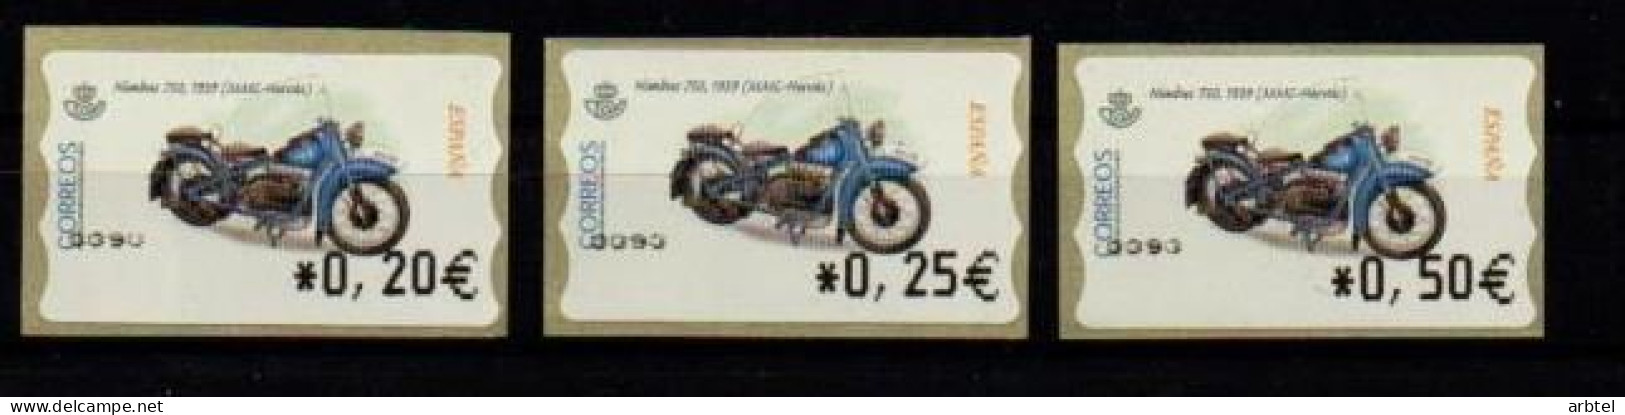 ESPAÑA SPAIN ATM MOTO MOTORCYCLE NIMBUS 750 - Motos